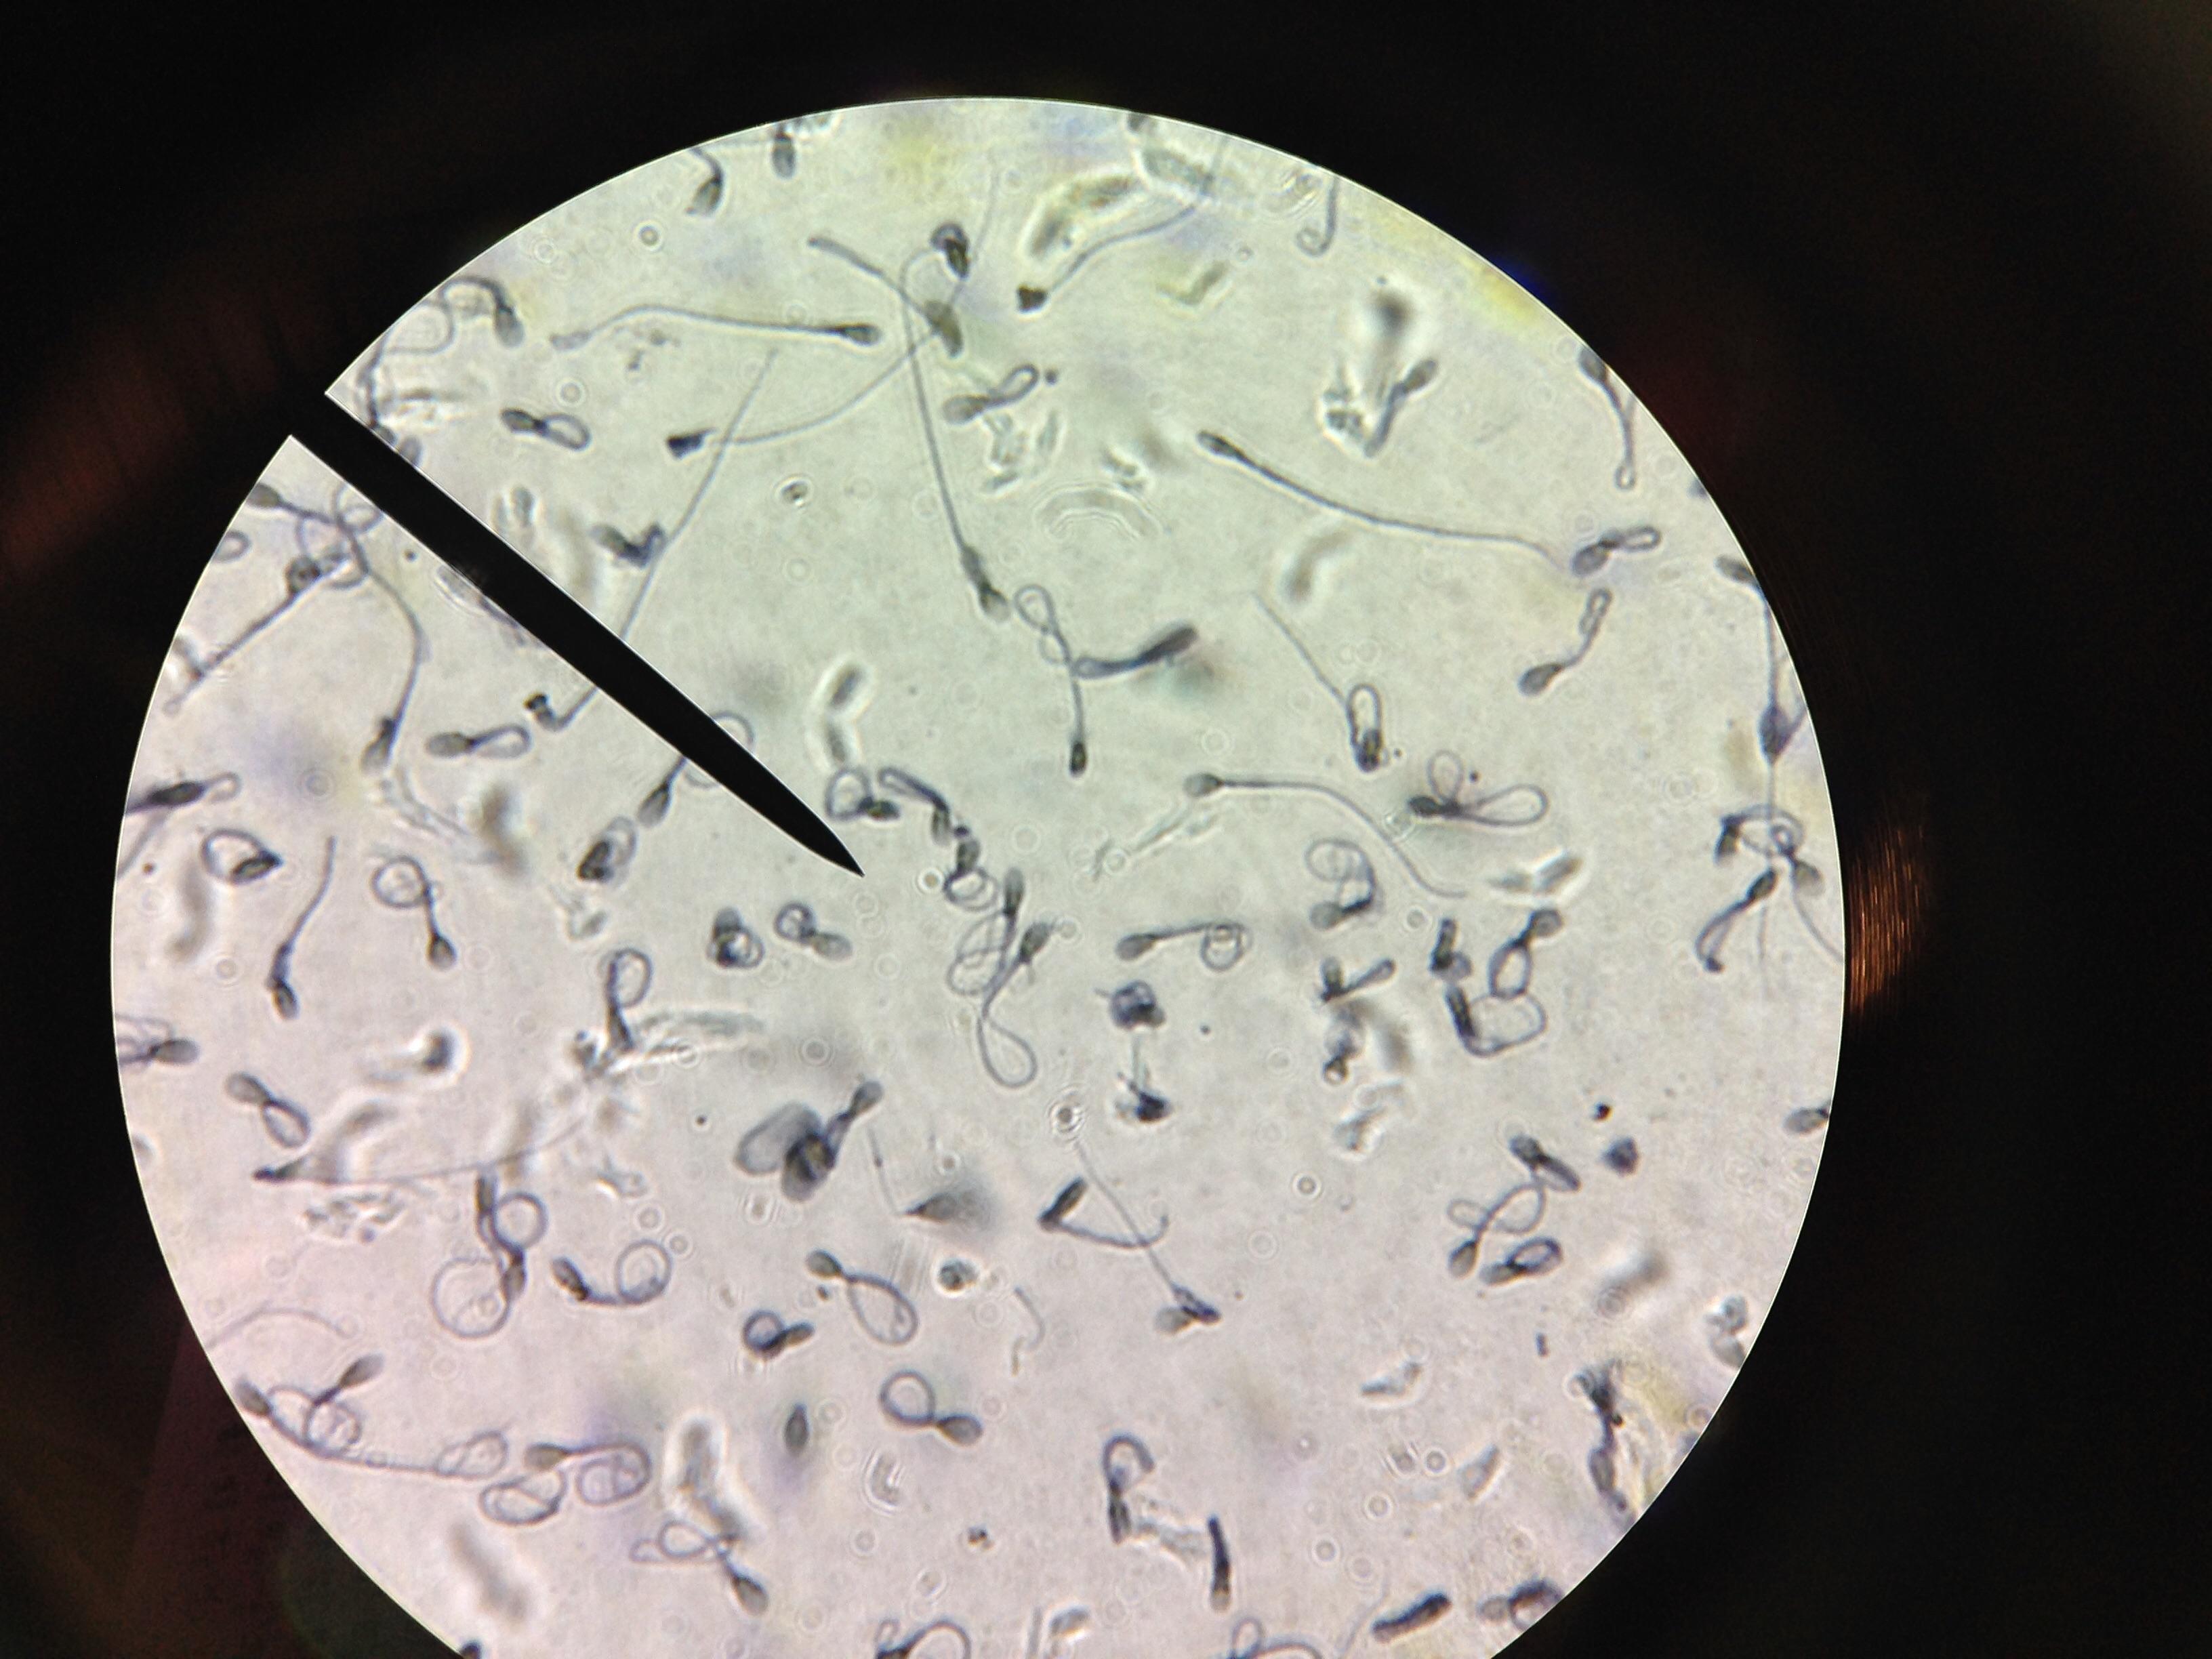 Sperm under a microcsope